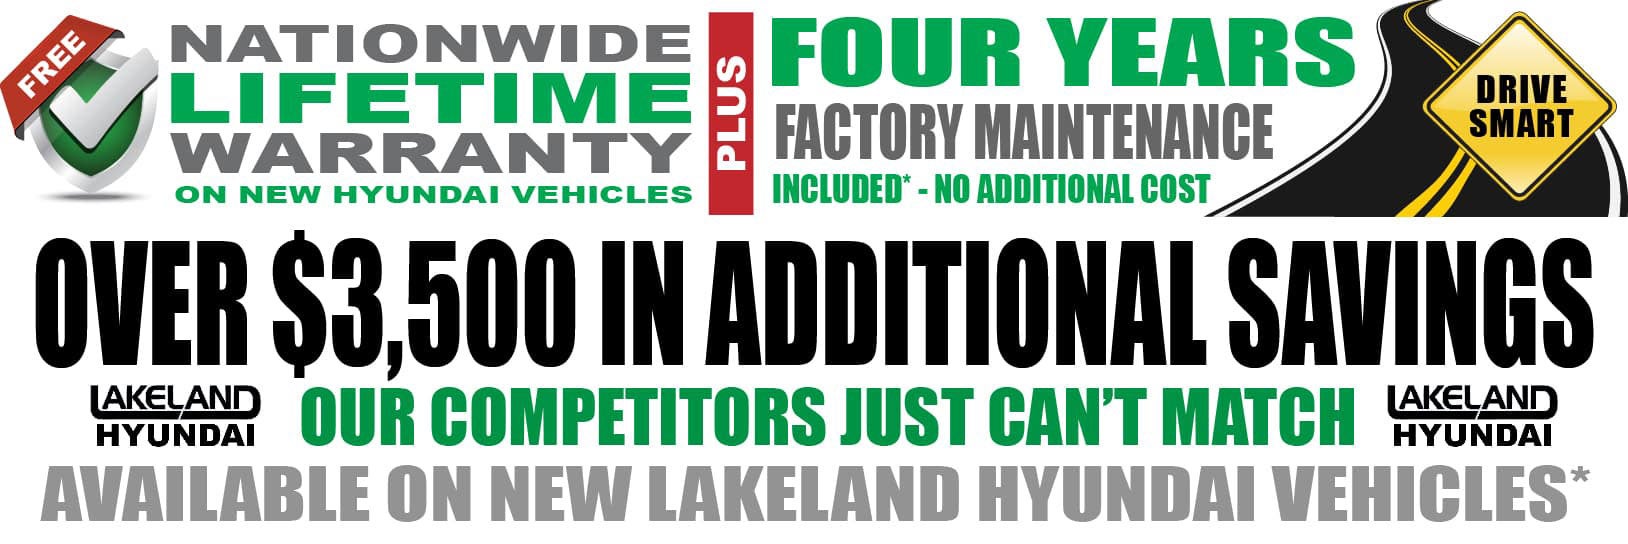 Nationwide Warranty | Lakeland Hyundai in Lakeland FL